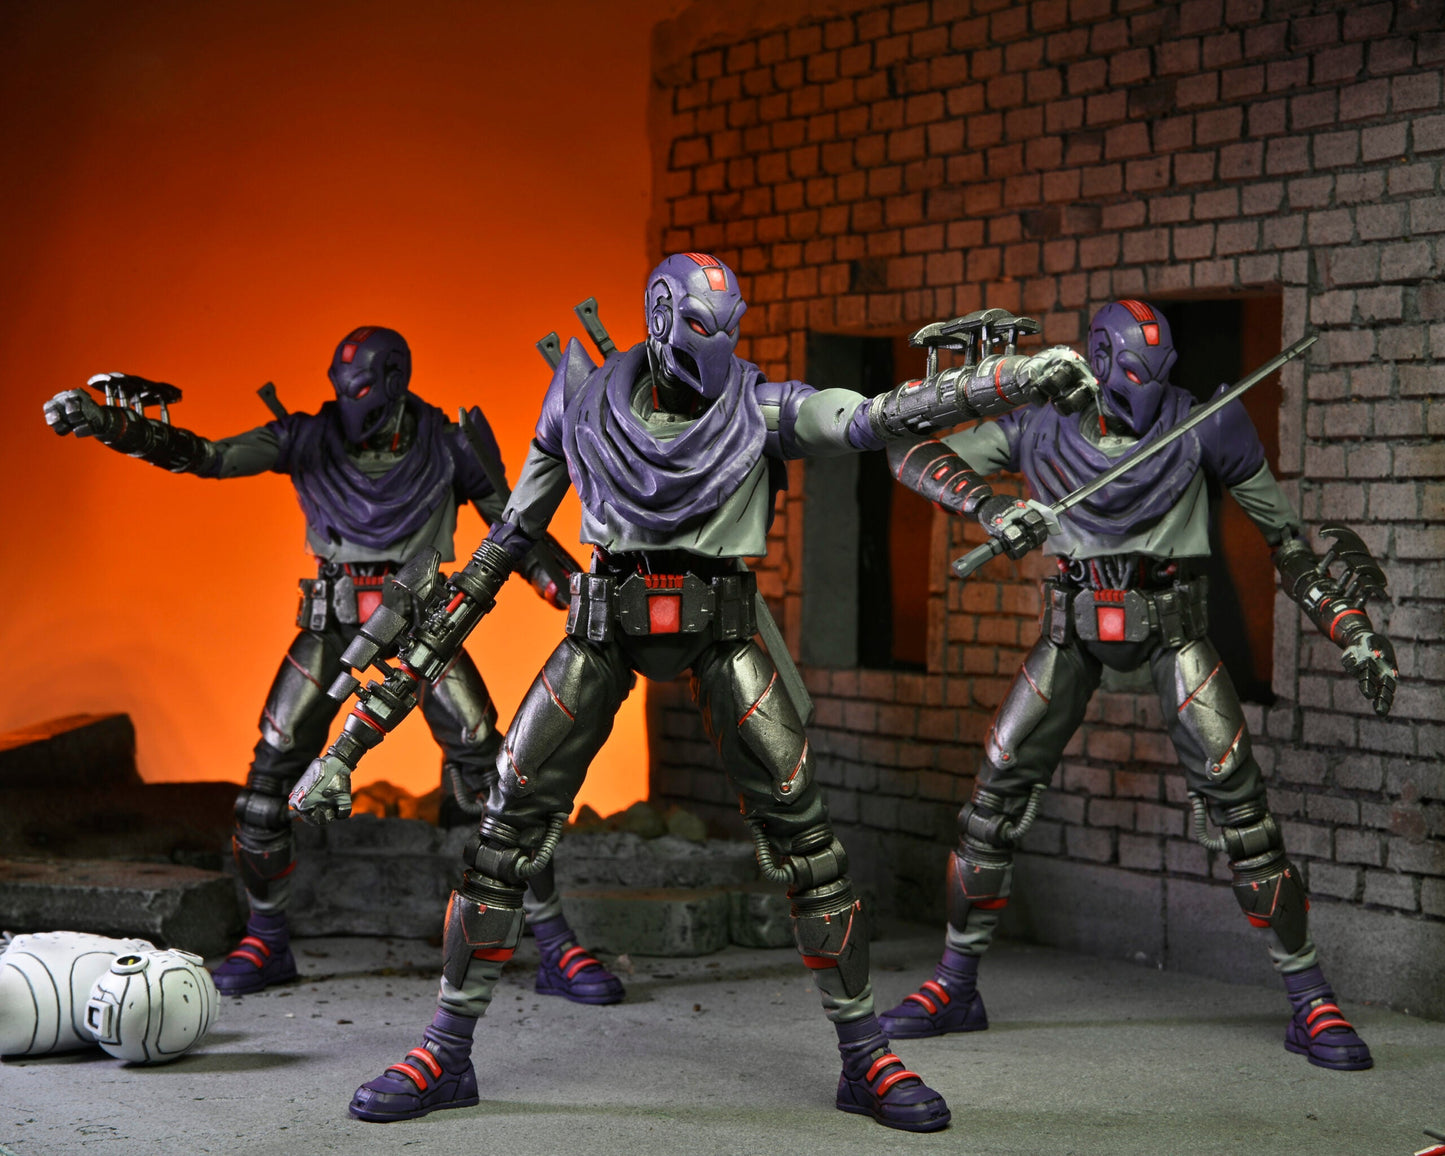 Teenage Mutant Ninja Turtles (The Last Ronin) 7” Scale Action Figure – Ultimate Foot Bot